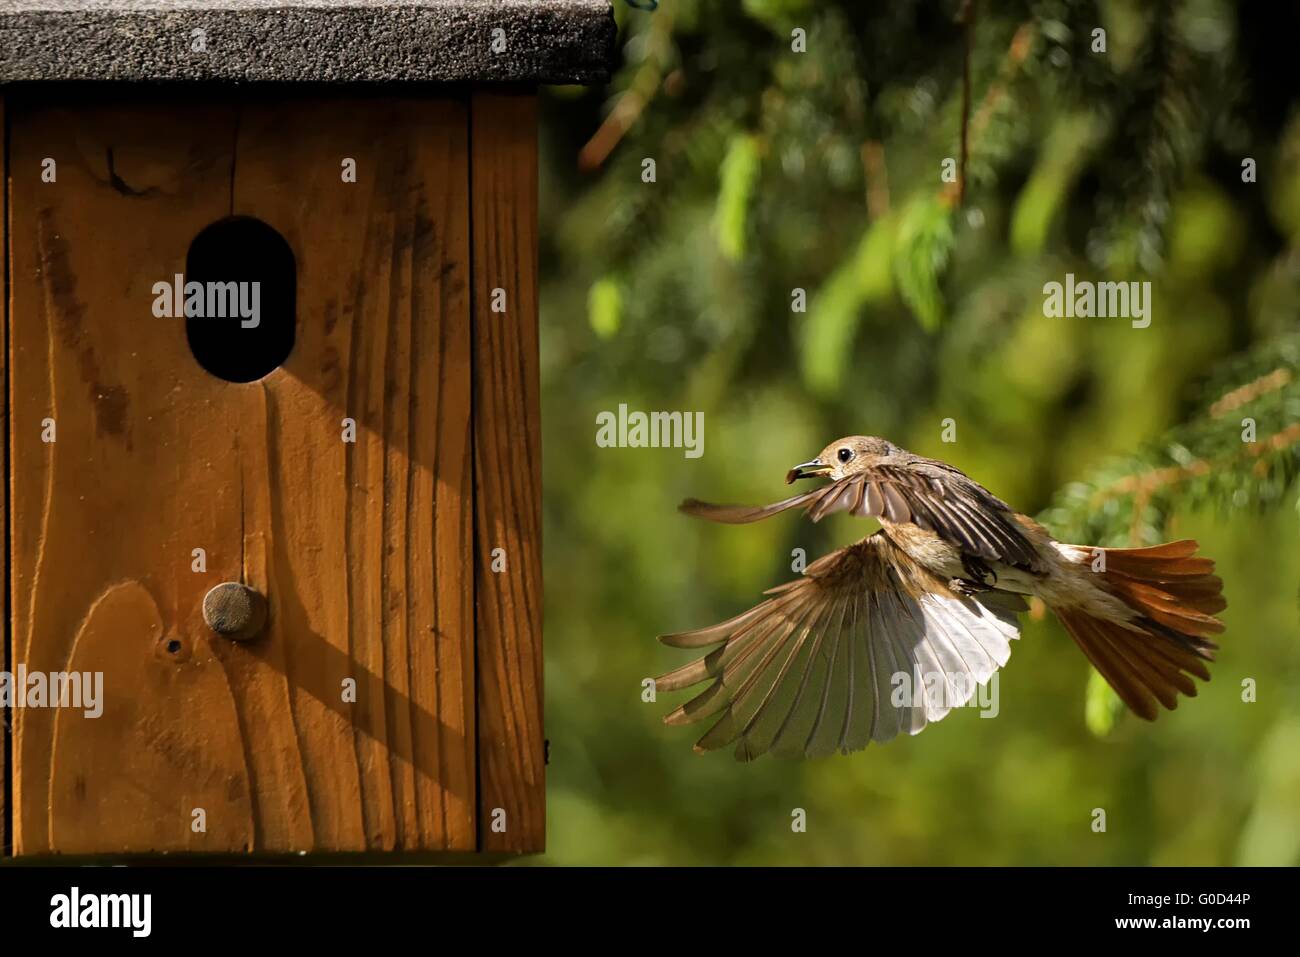 Gartenrotschwanz im Nistkasten Stockfotografie - Alamy